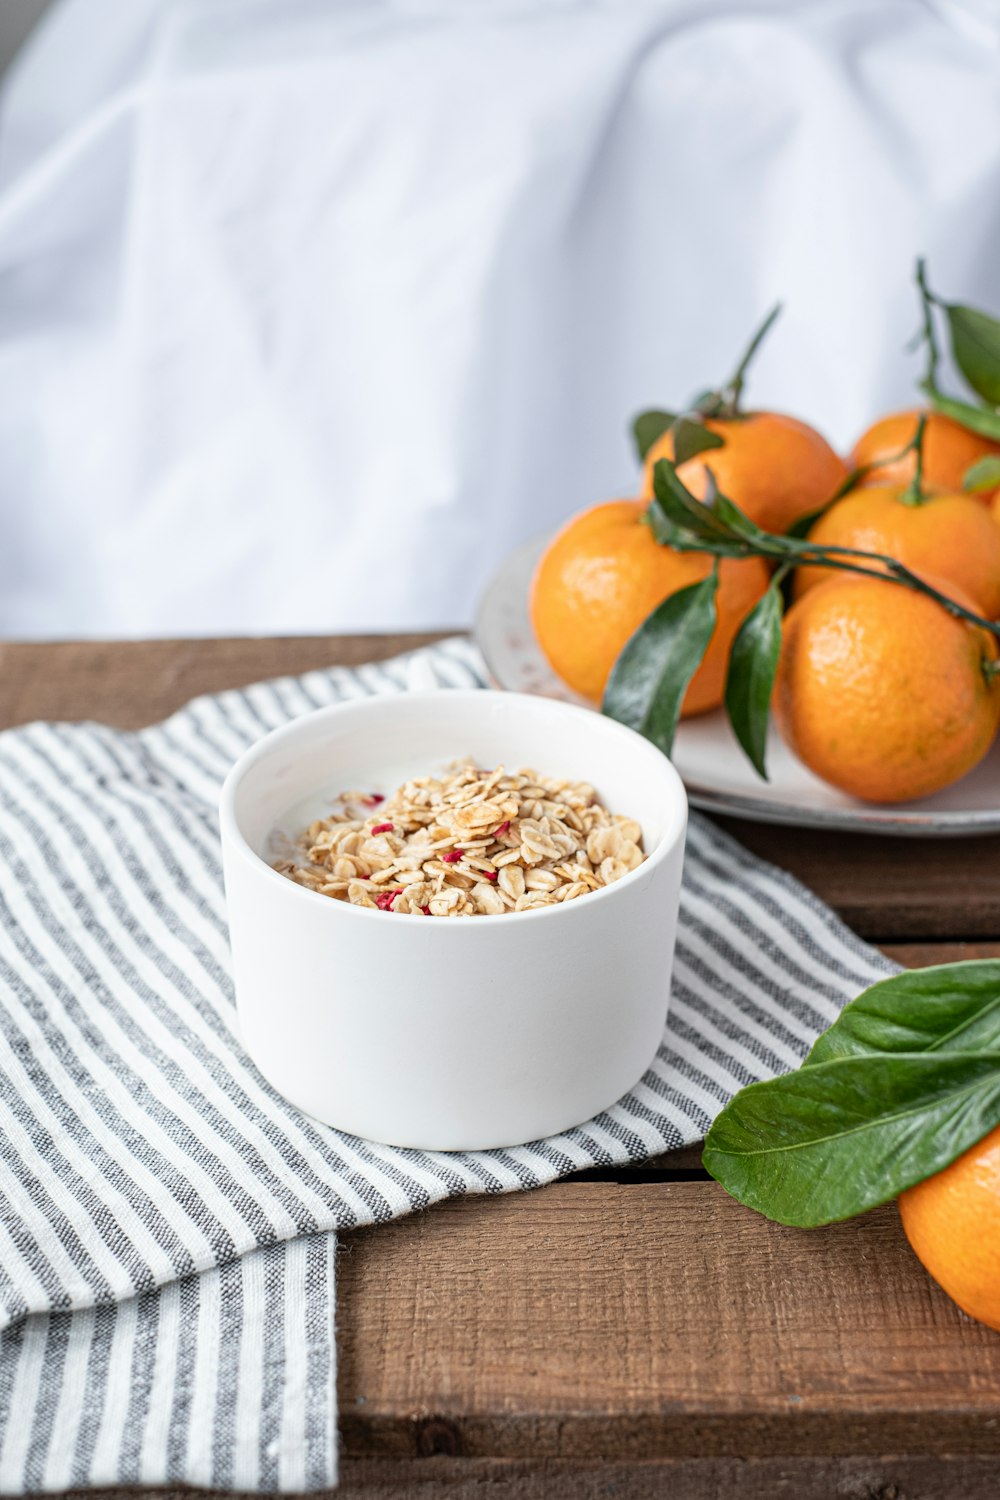 orange fruits on white ceramic bowl